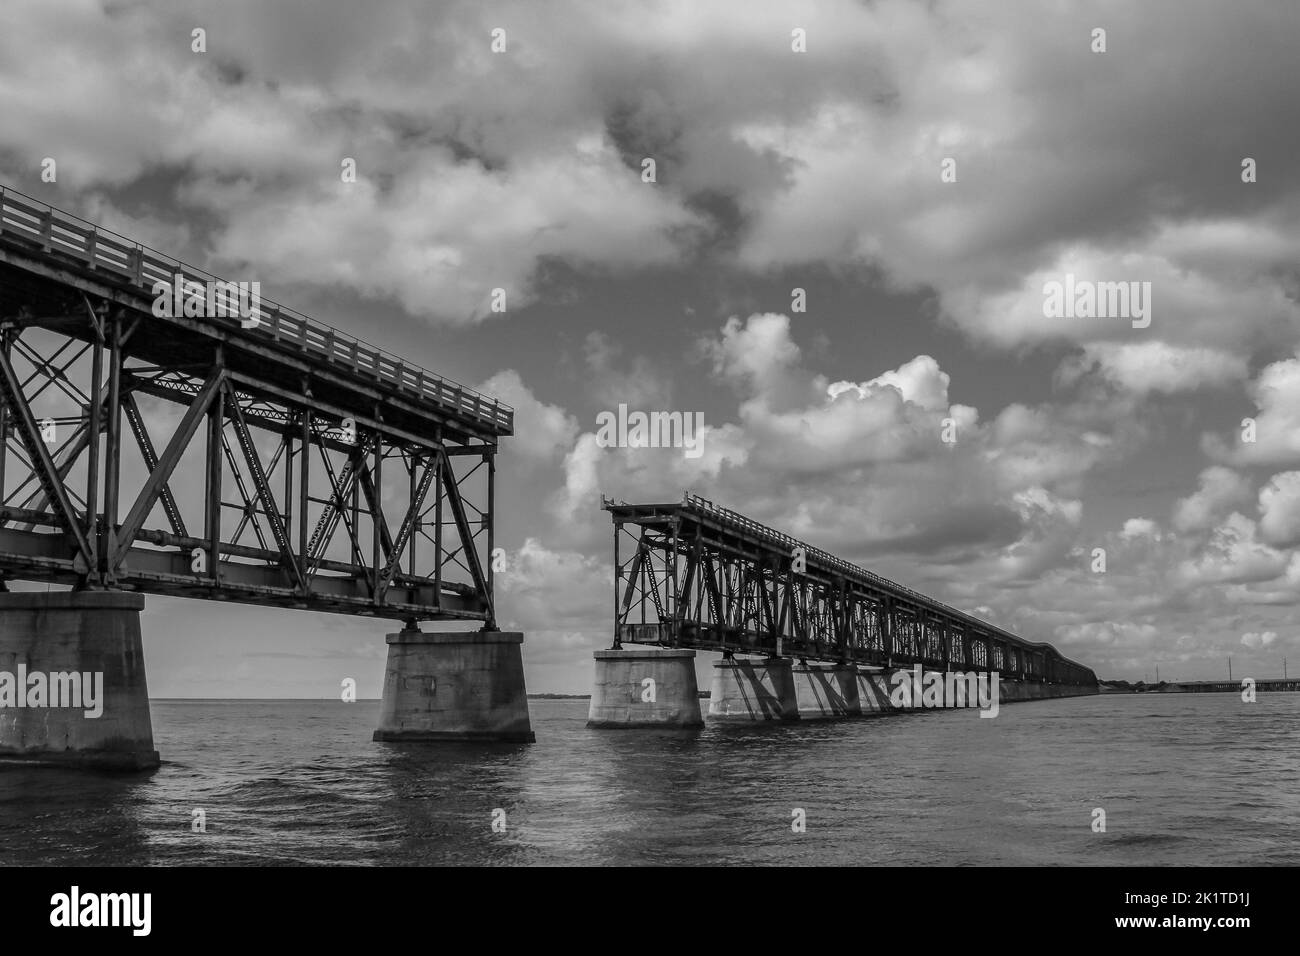 A grayscale of the abandoned Historical Railroad Bridge In Bahia Honda Key Stock Photo